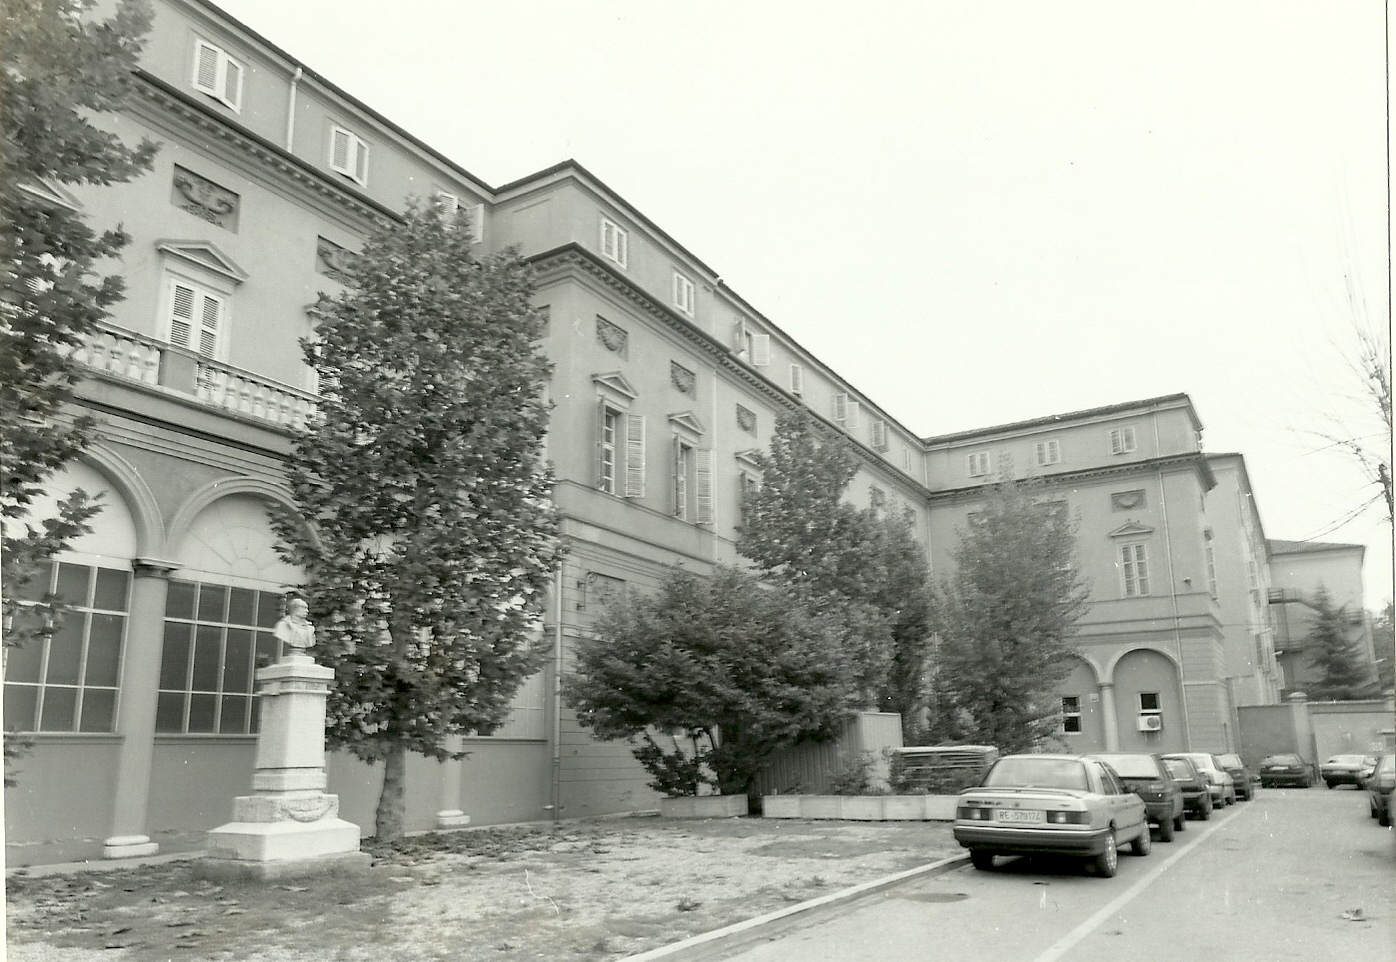 Palazzo Ducale (palazzo, ducale) - Modena (MO)  (XVII; XX)